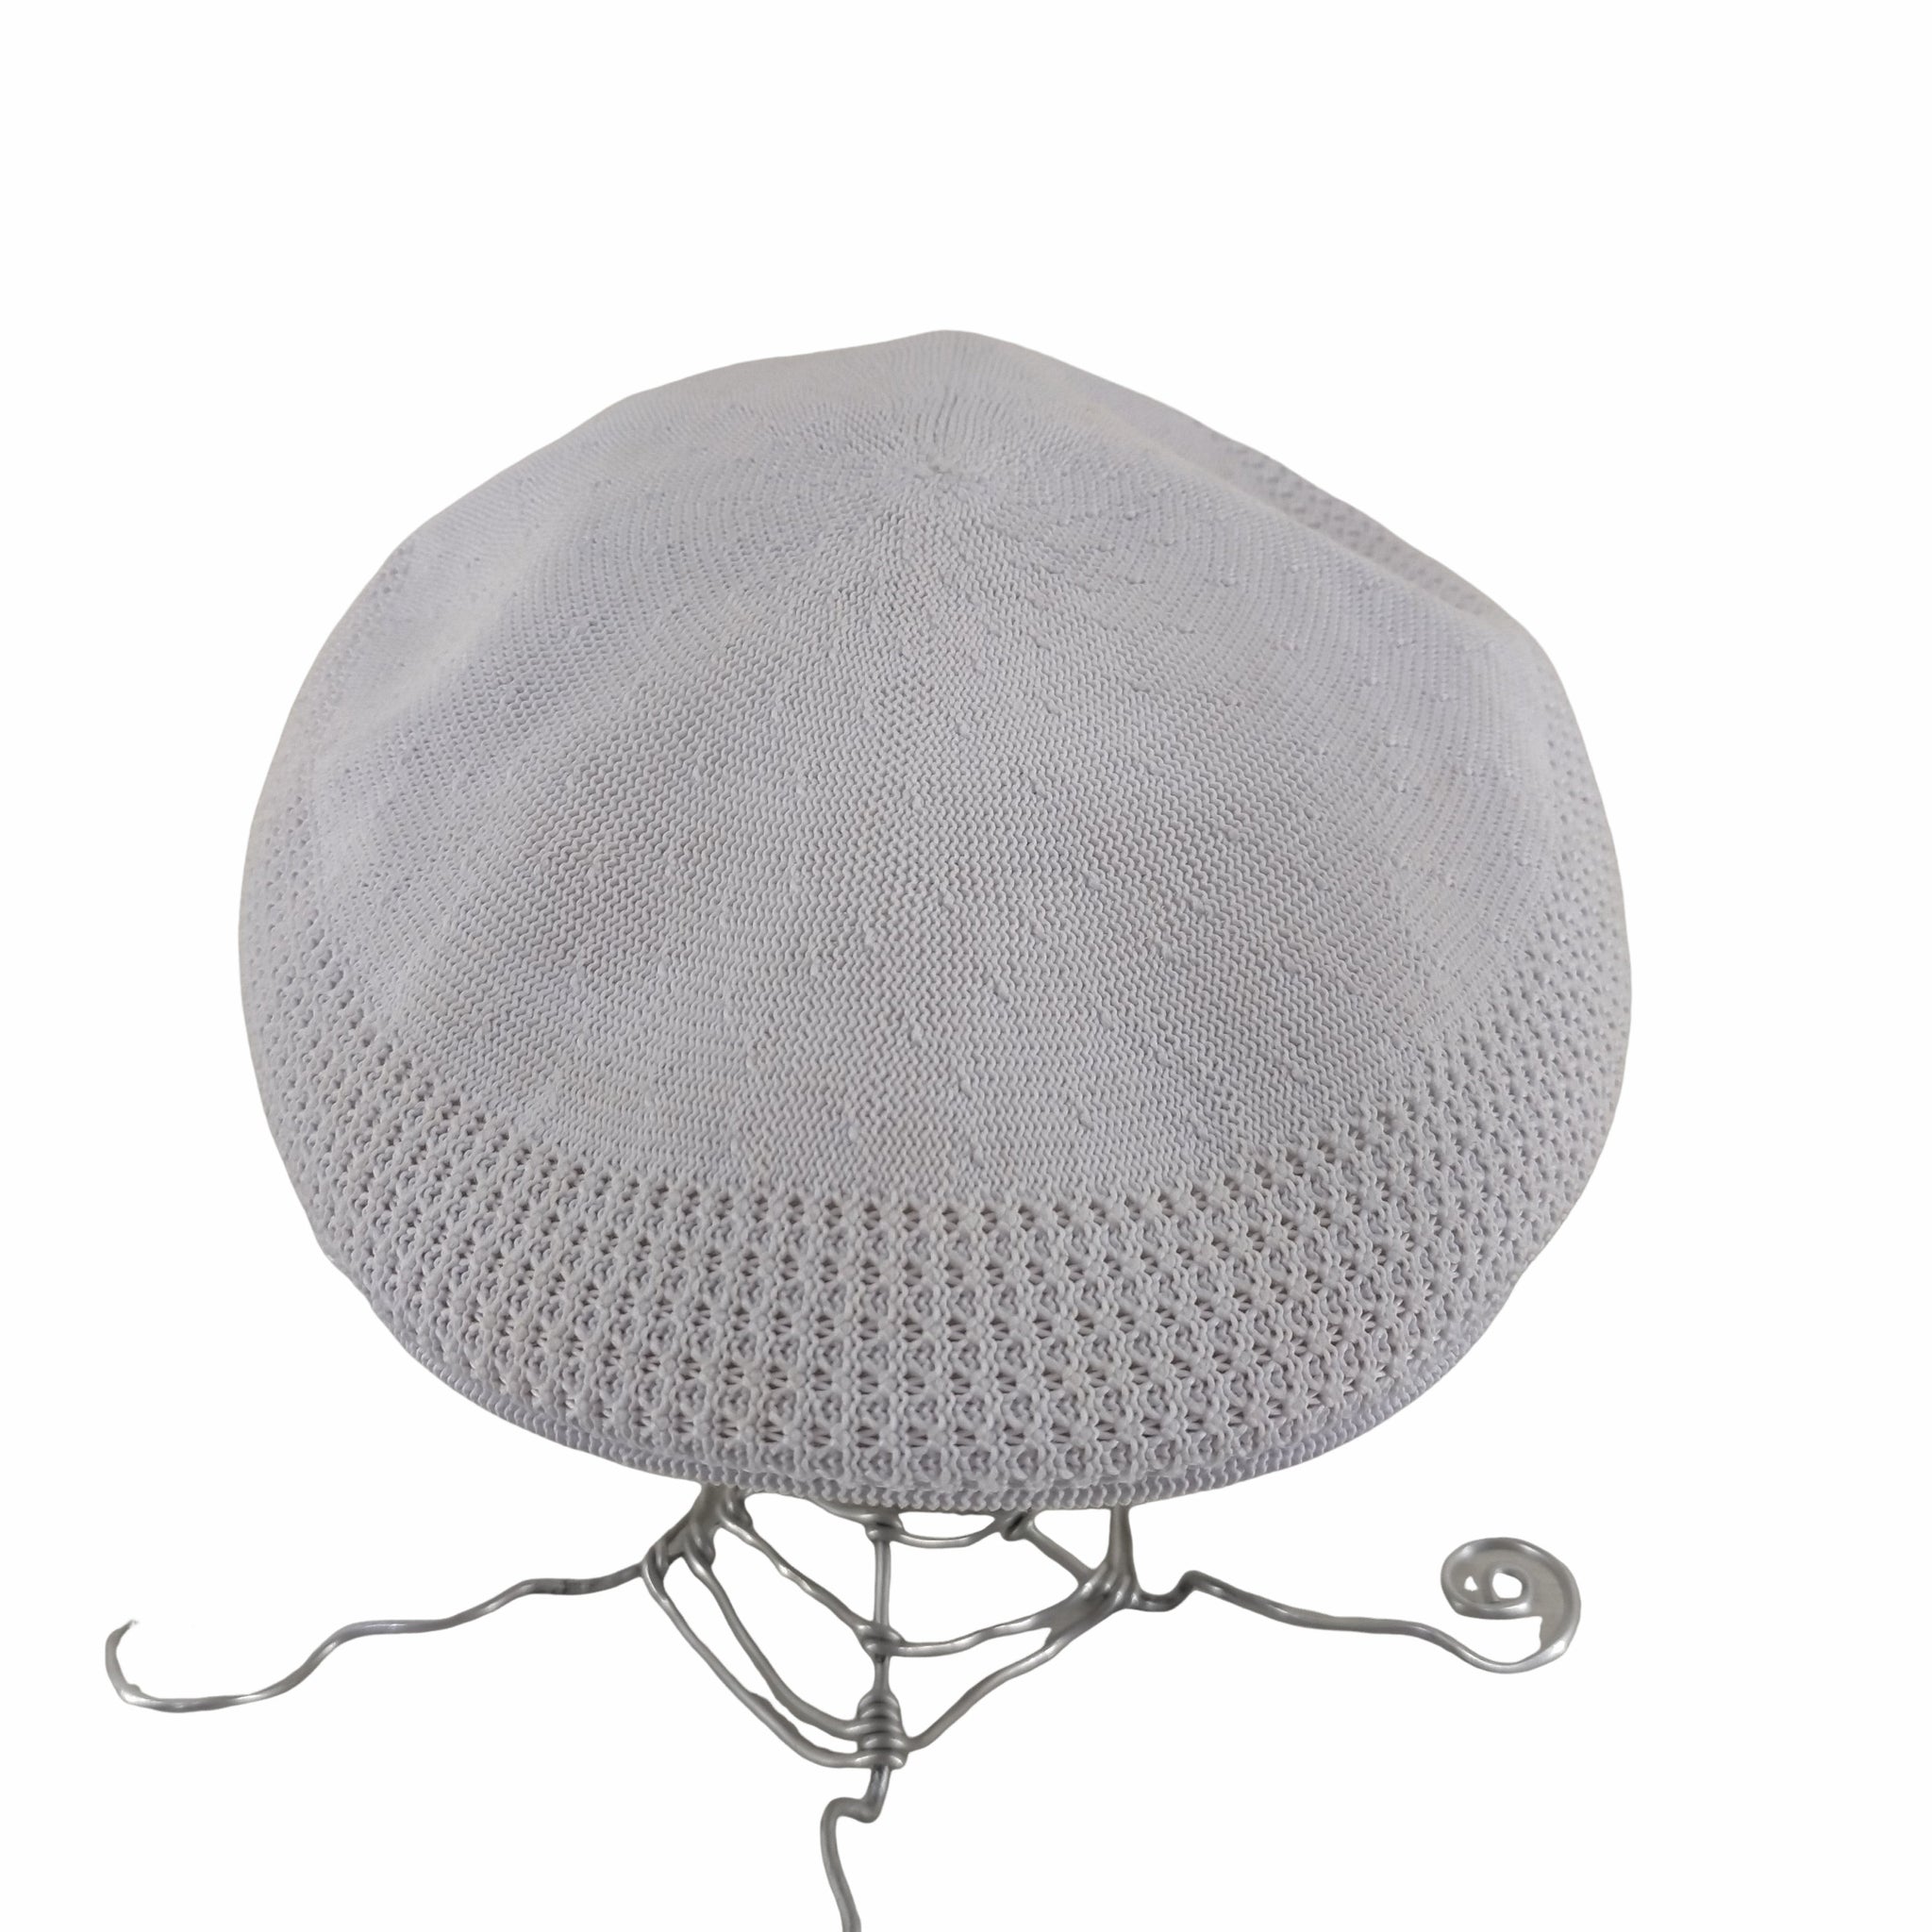 KANGOL(カンゴール)Tropic 504 Ventair ハンチング帽